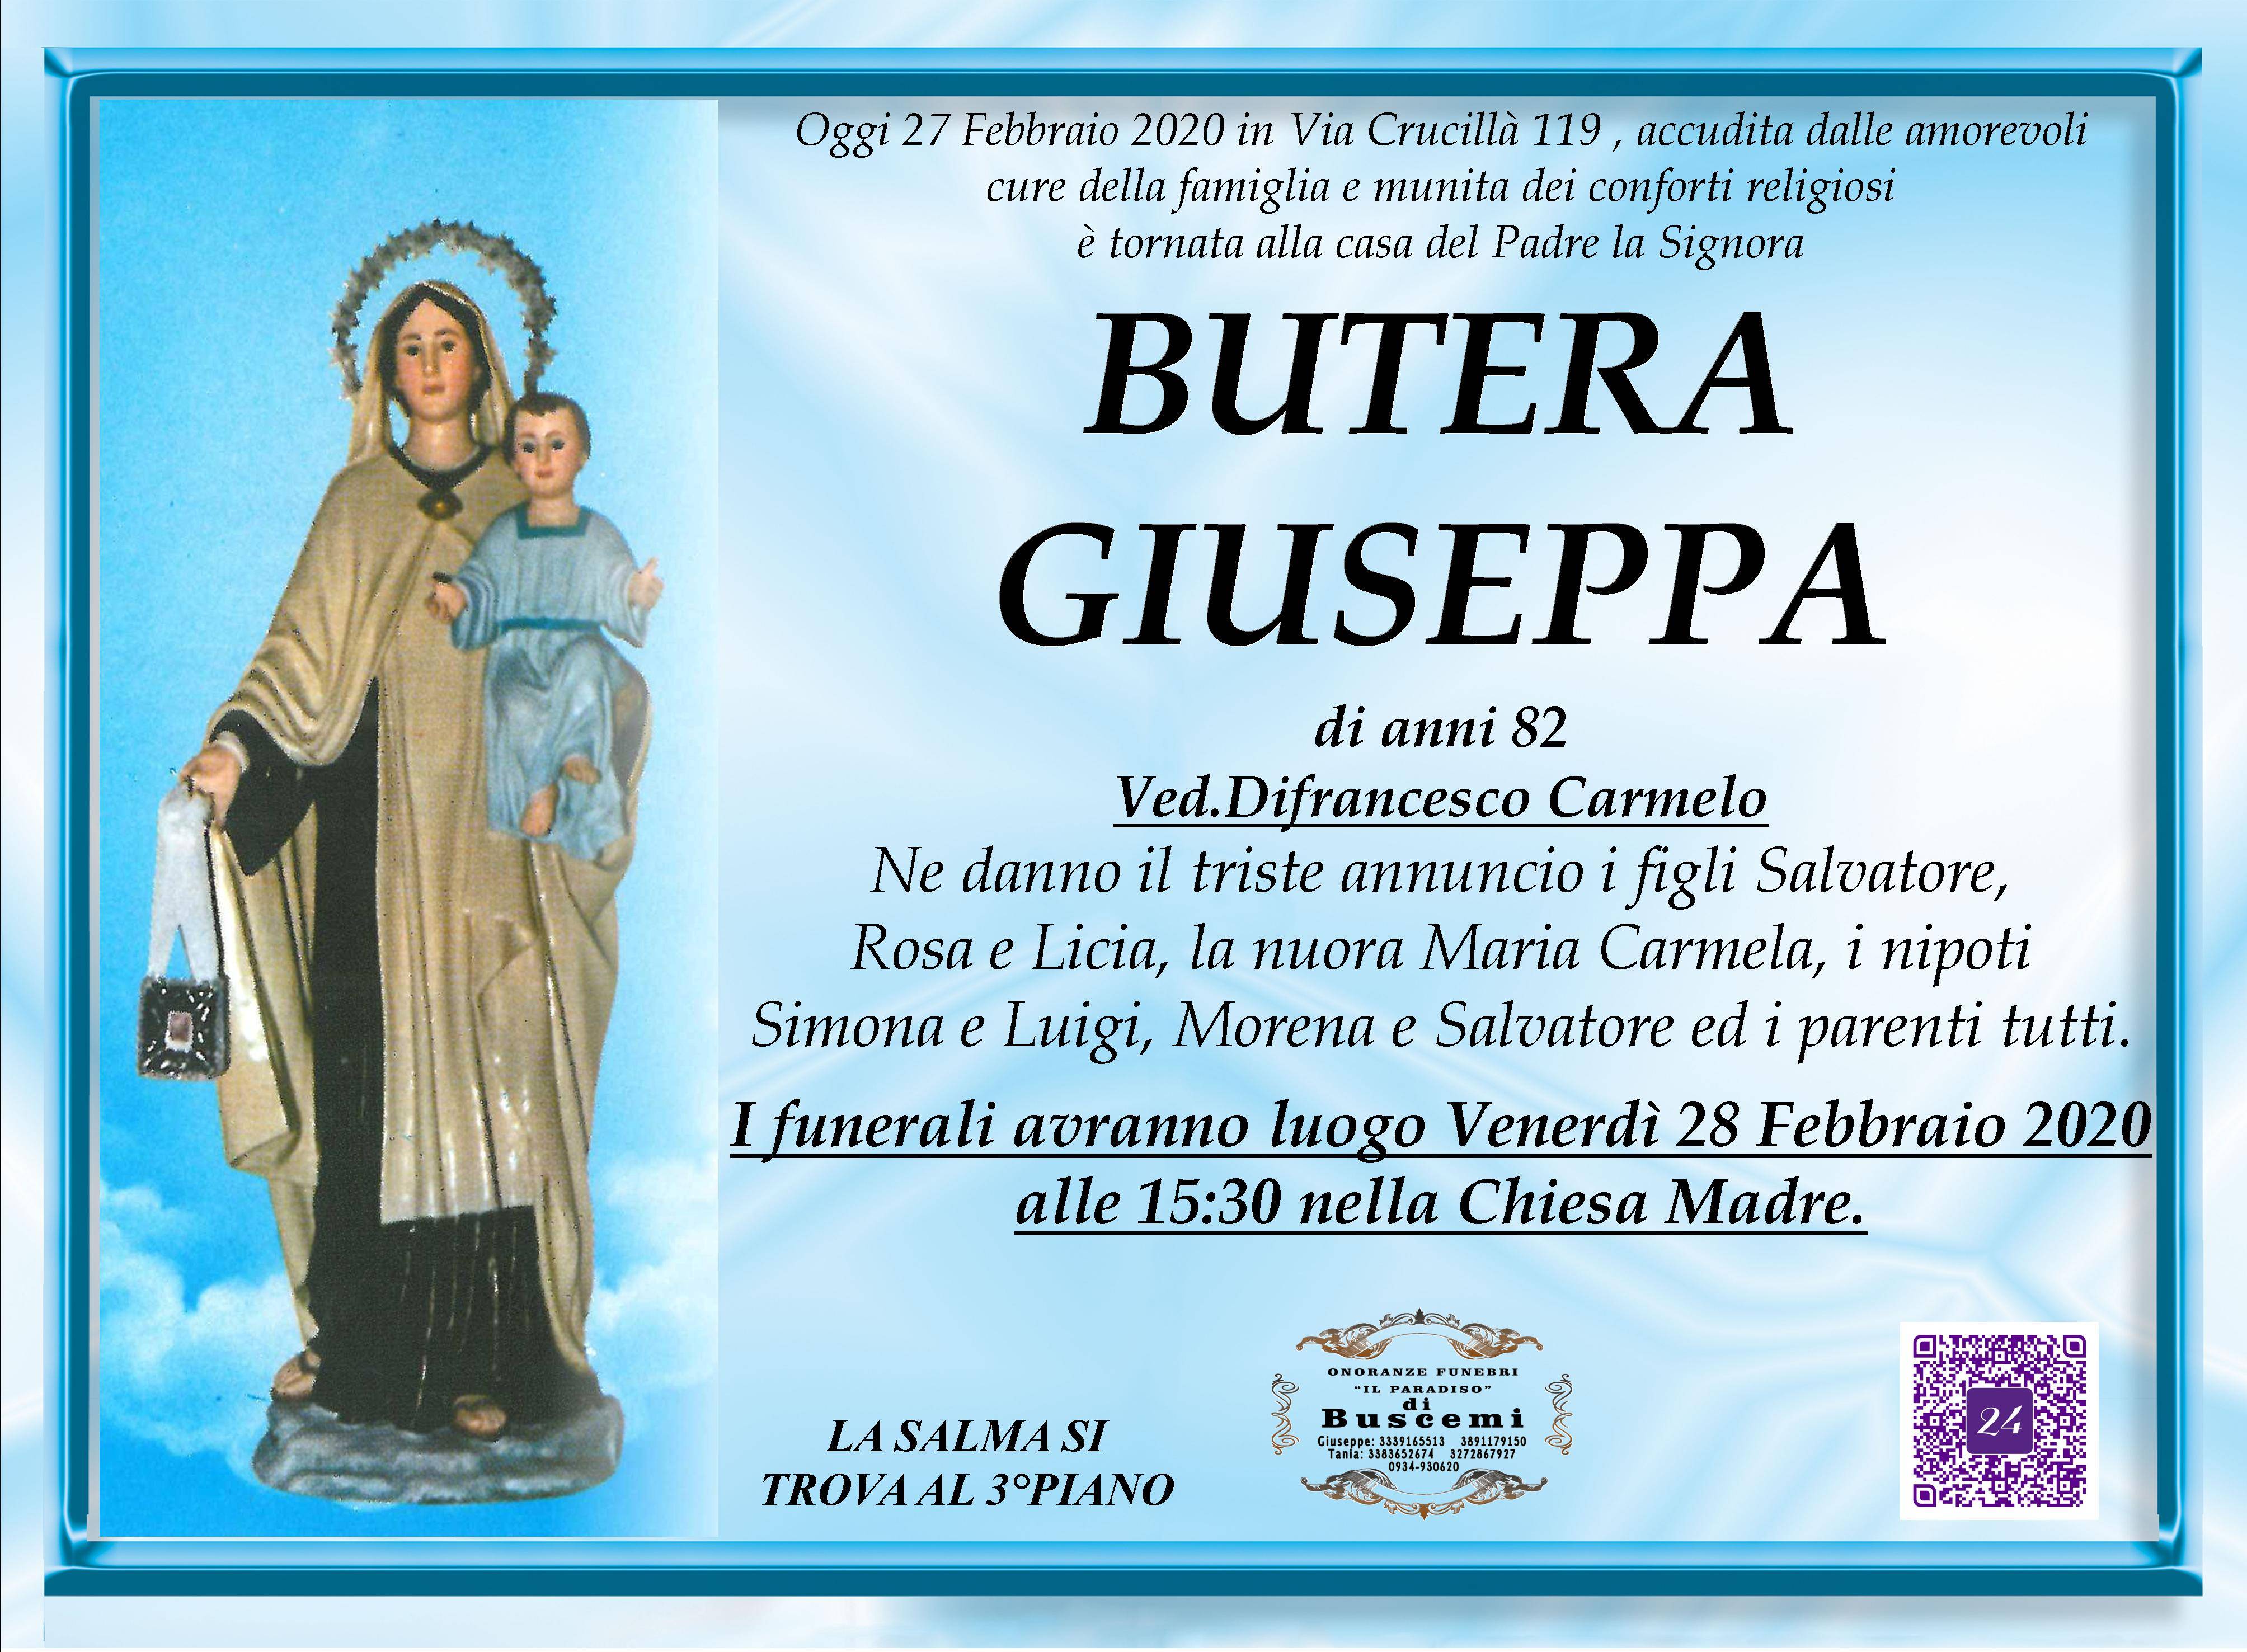 Giuseppa Butera